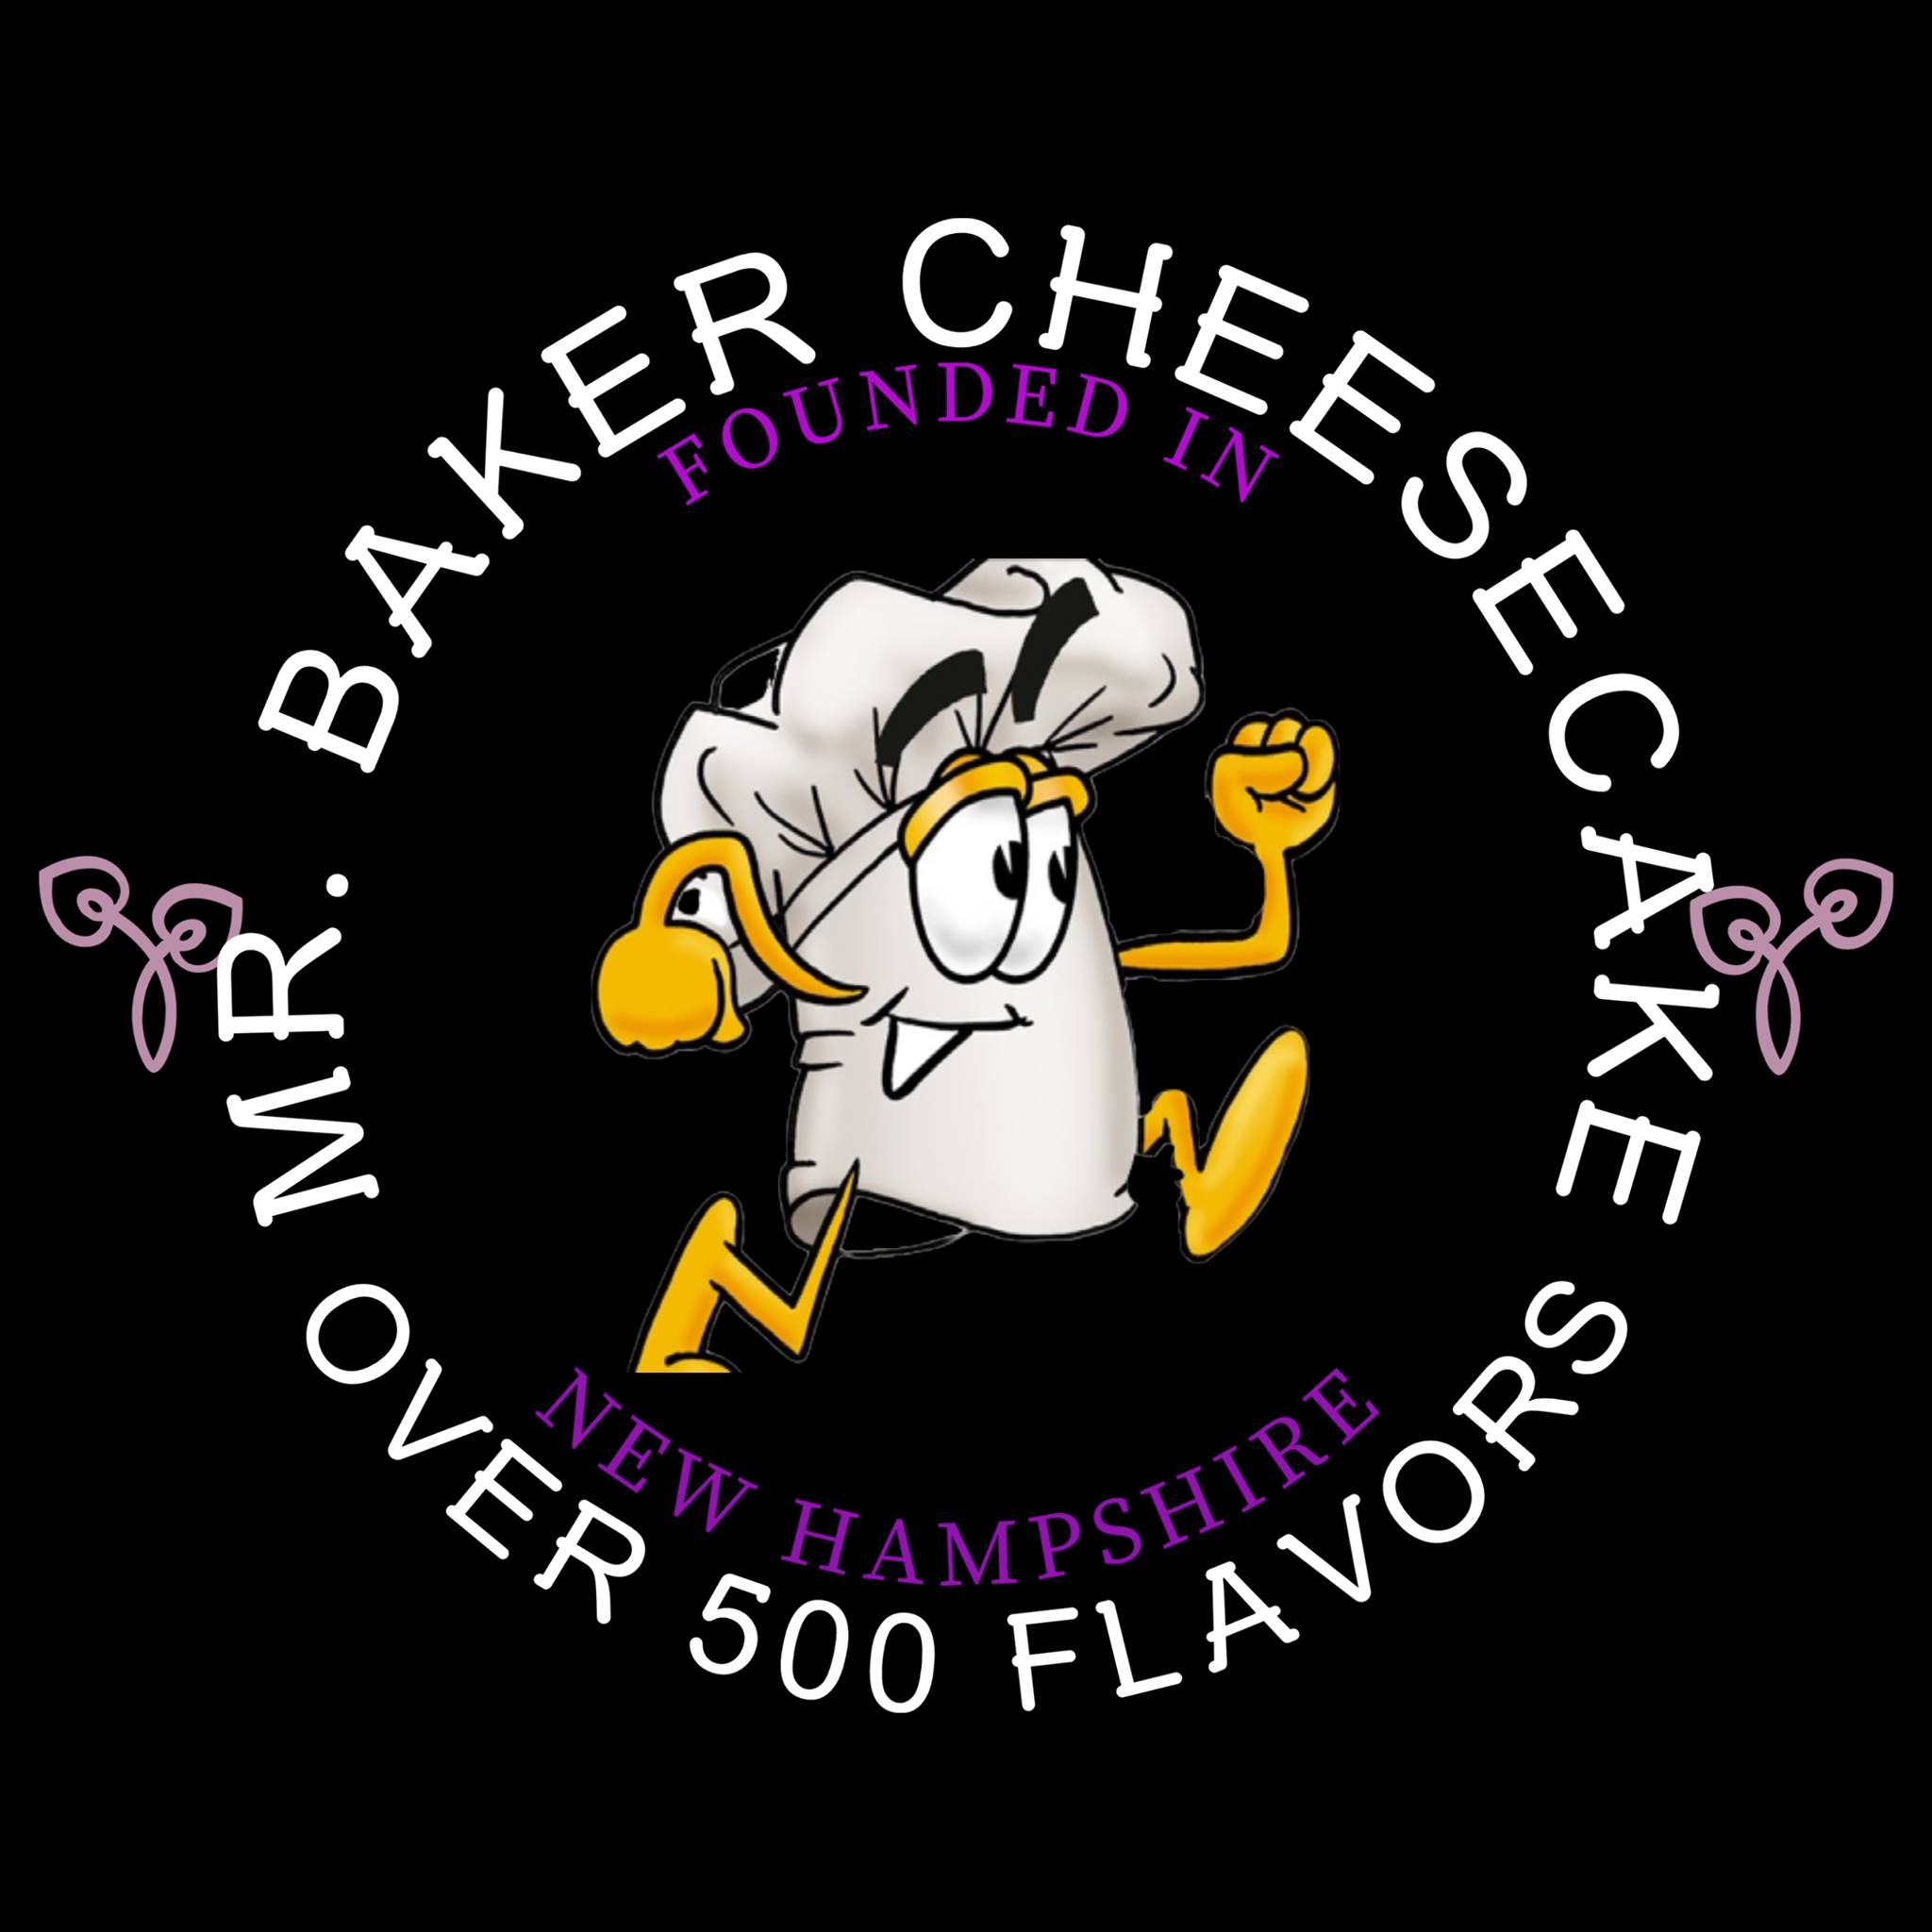 Mr. Baker Cheesecake Co